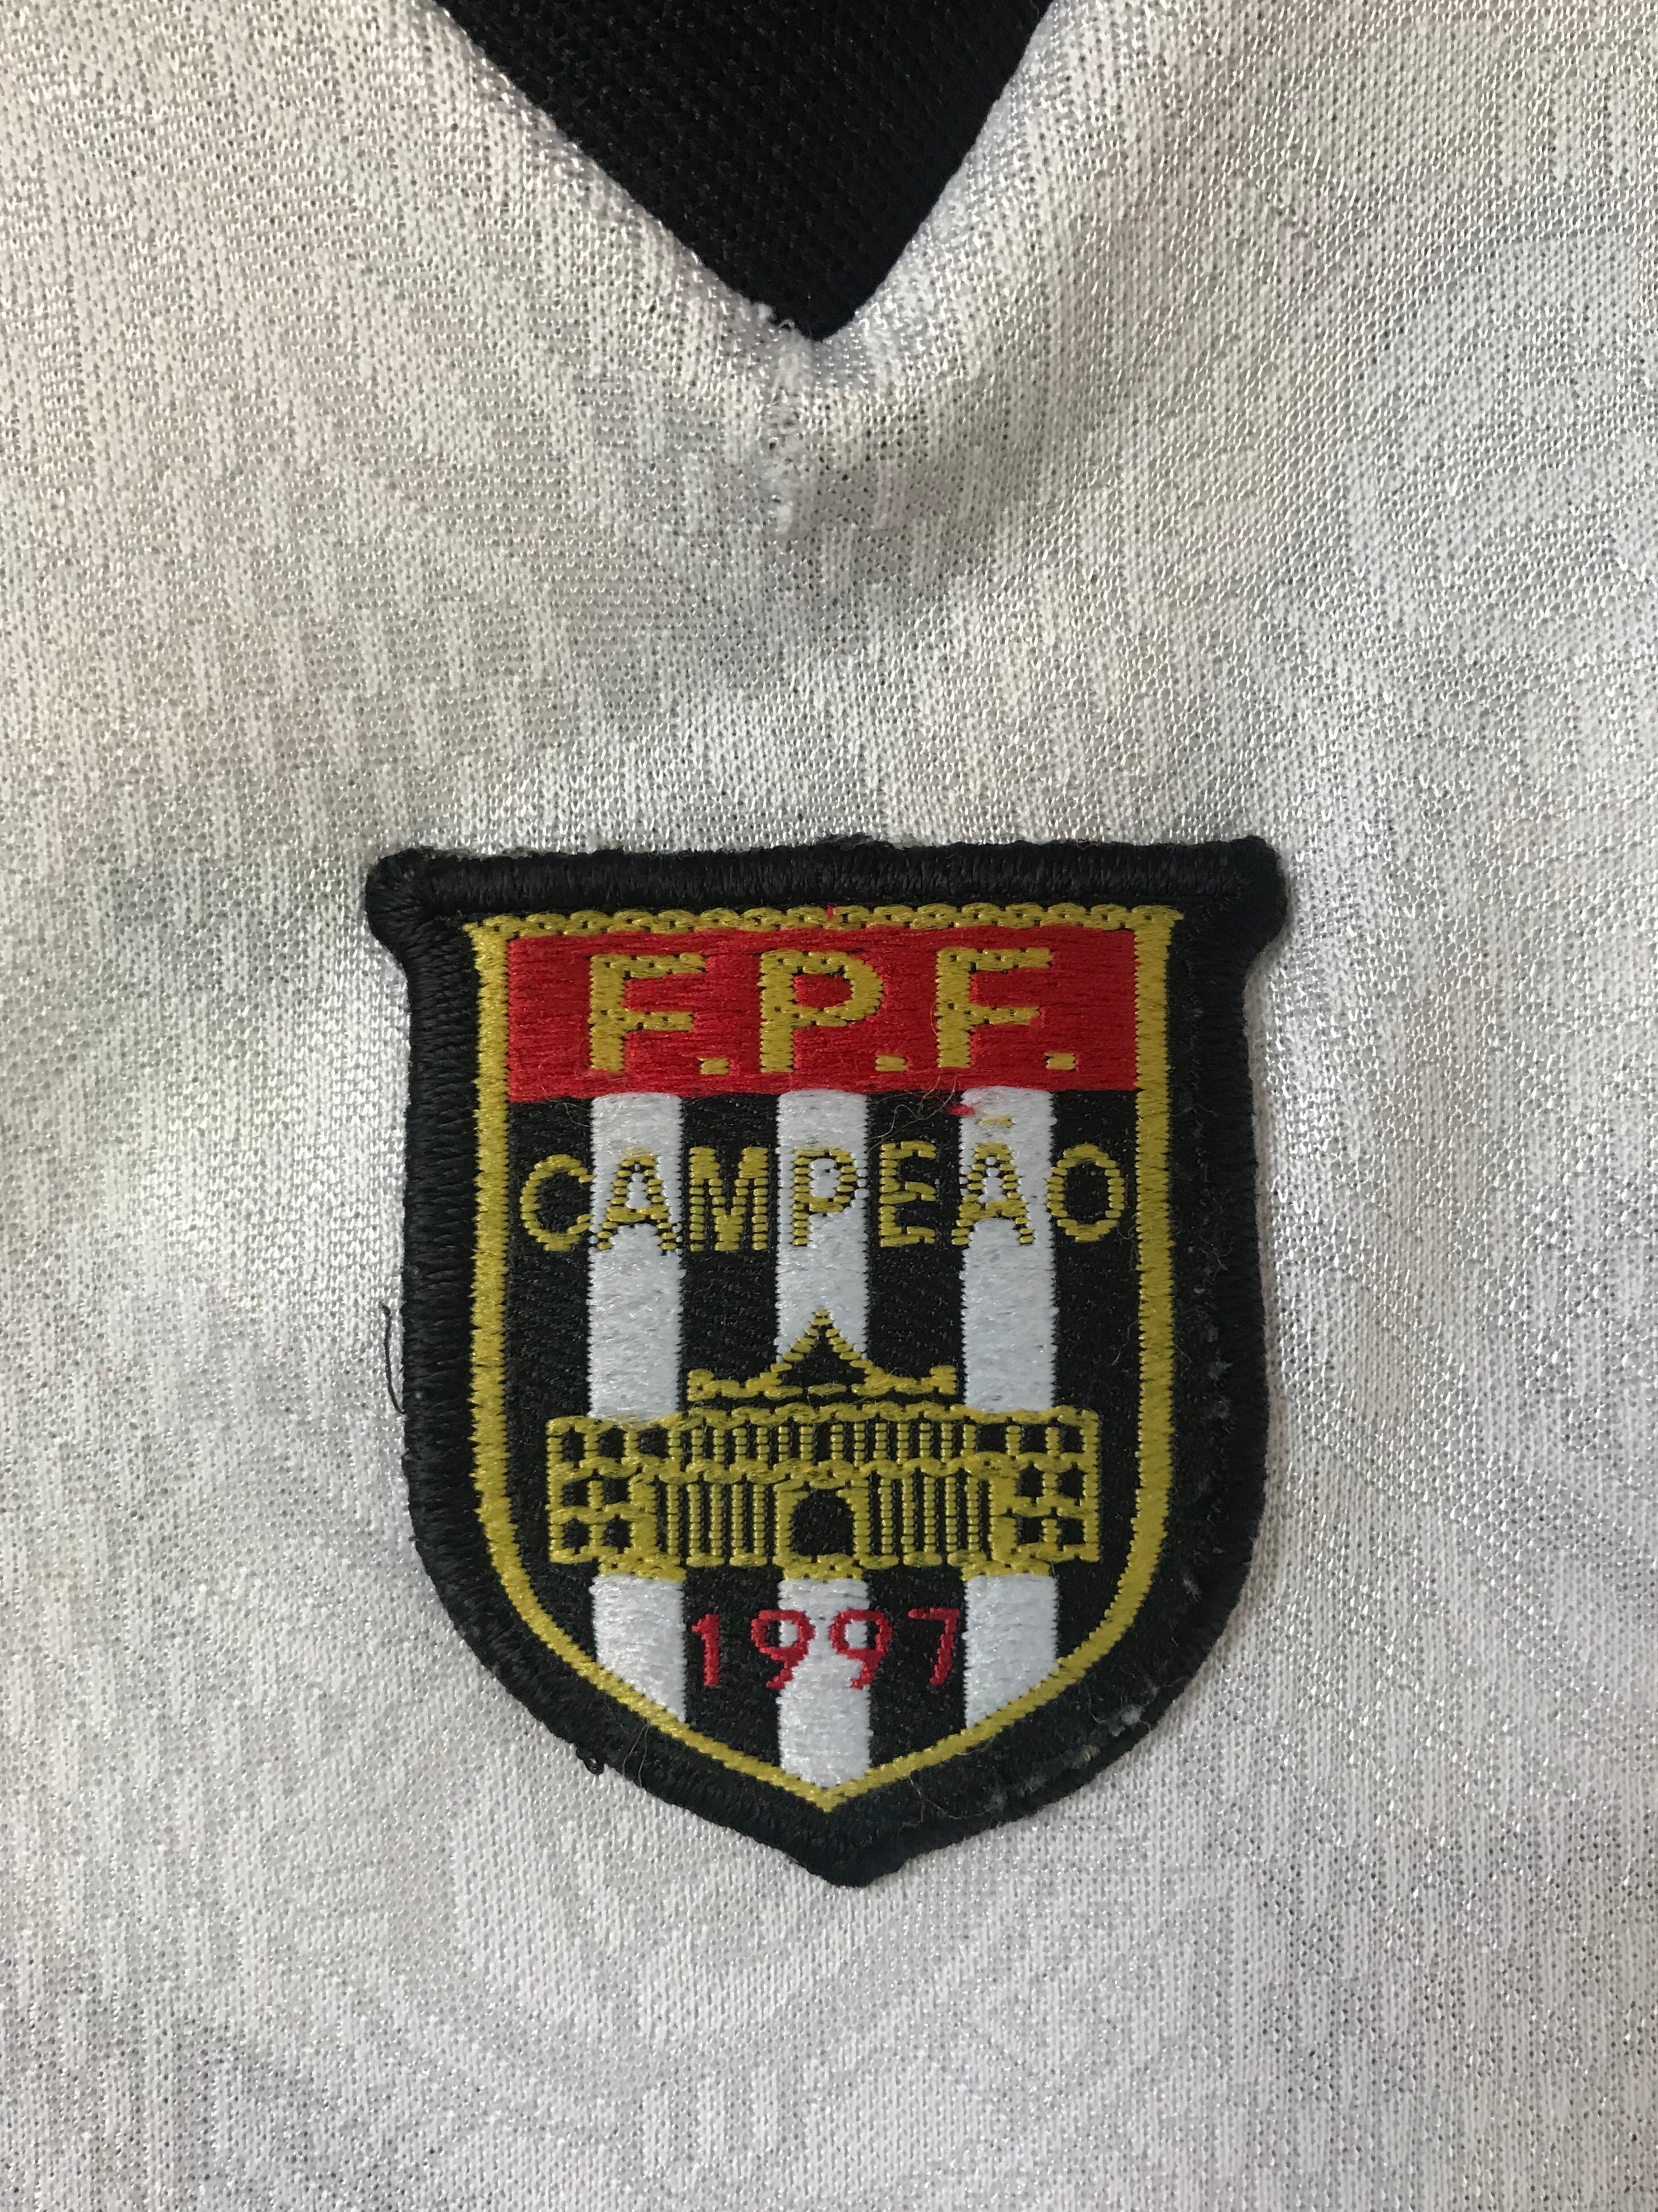 1998 Corinthians Home Shirt #10 (Edilson) (XL) 9/10